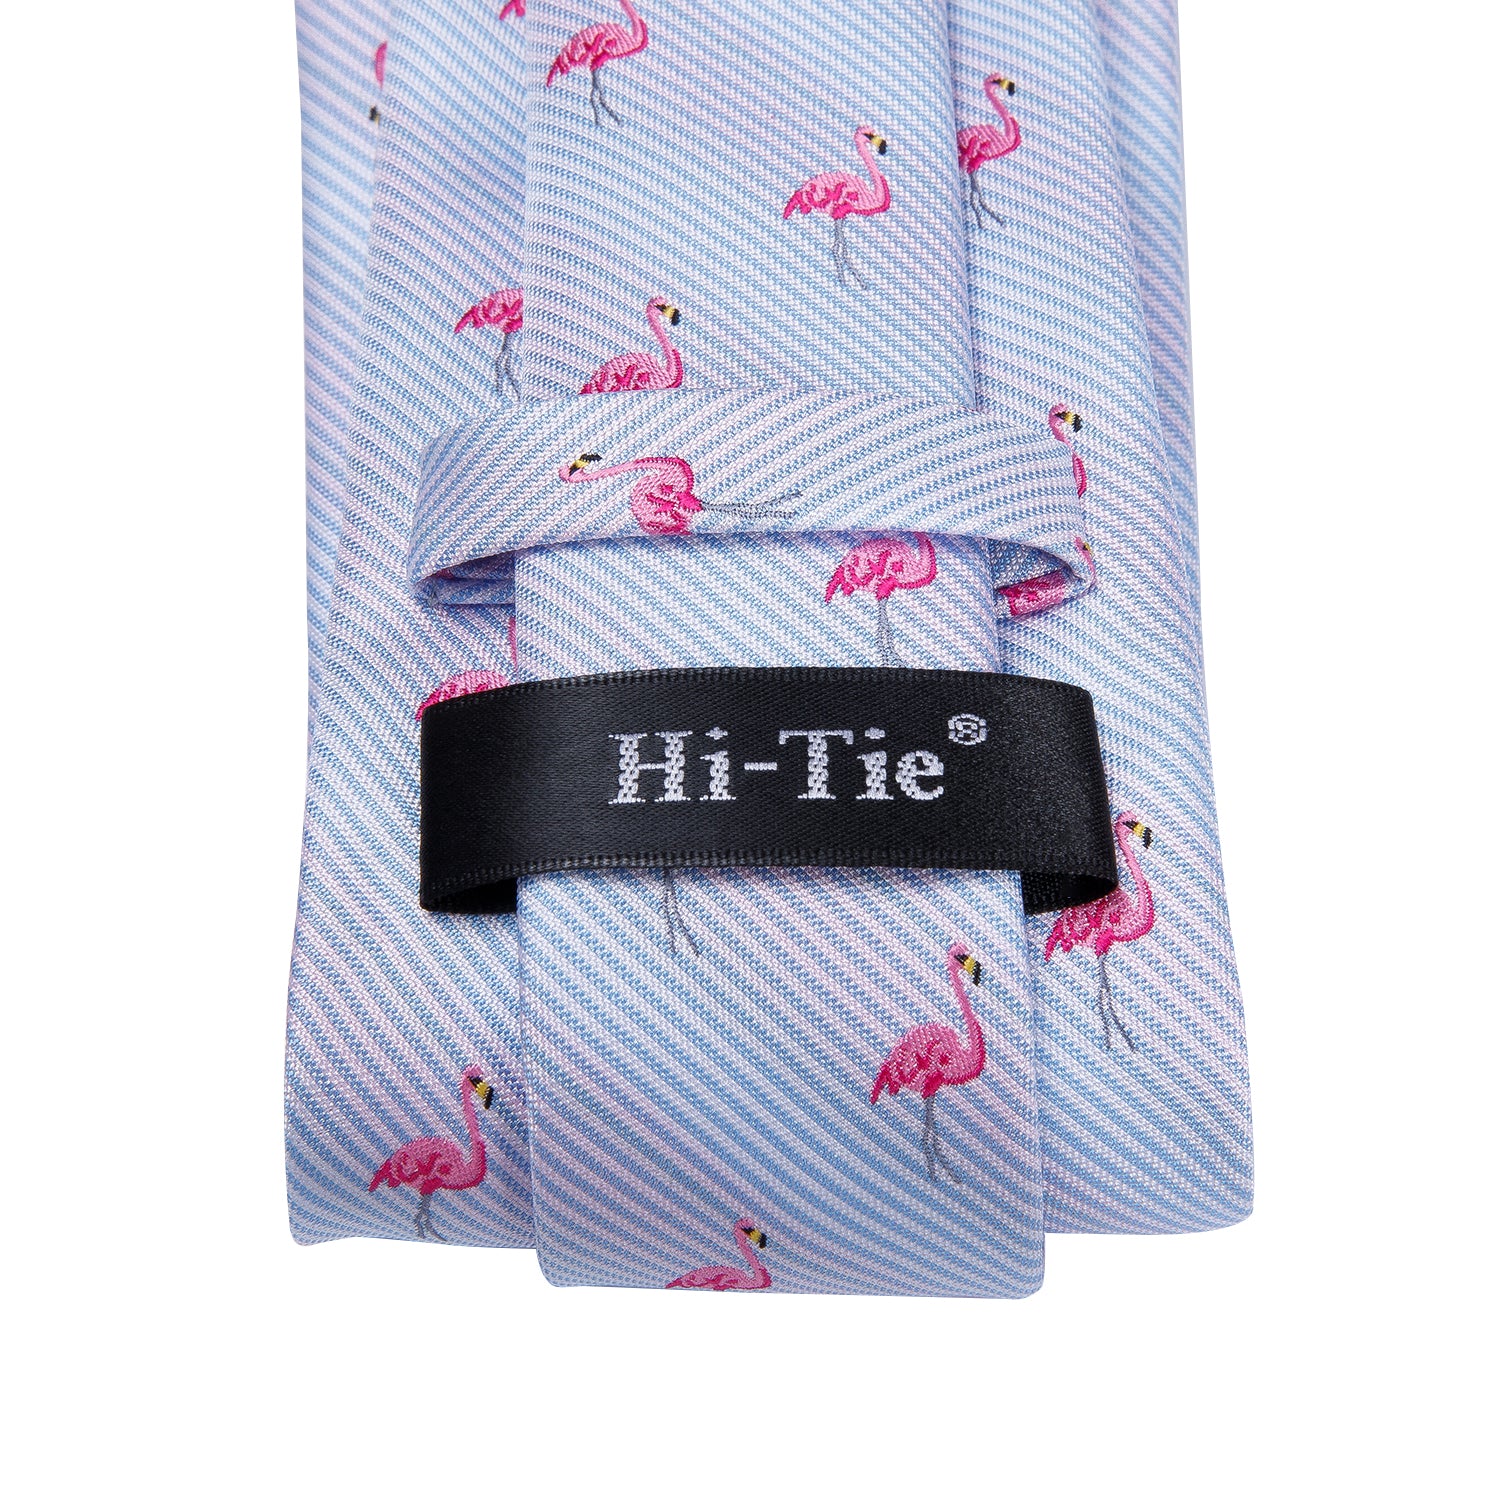 Pink Flamingo Tie Pocket Square Cufflinks Set